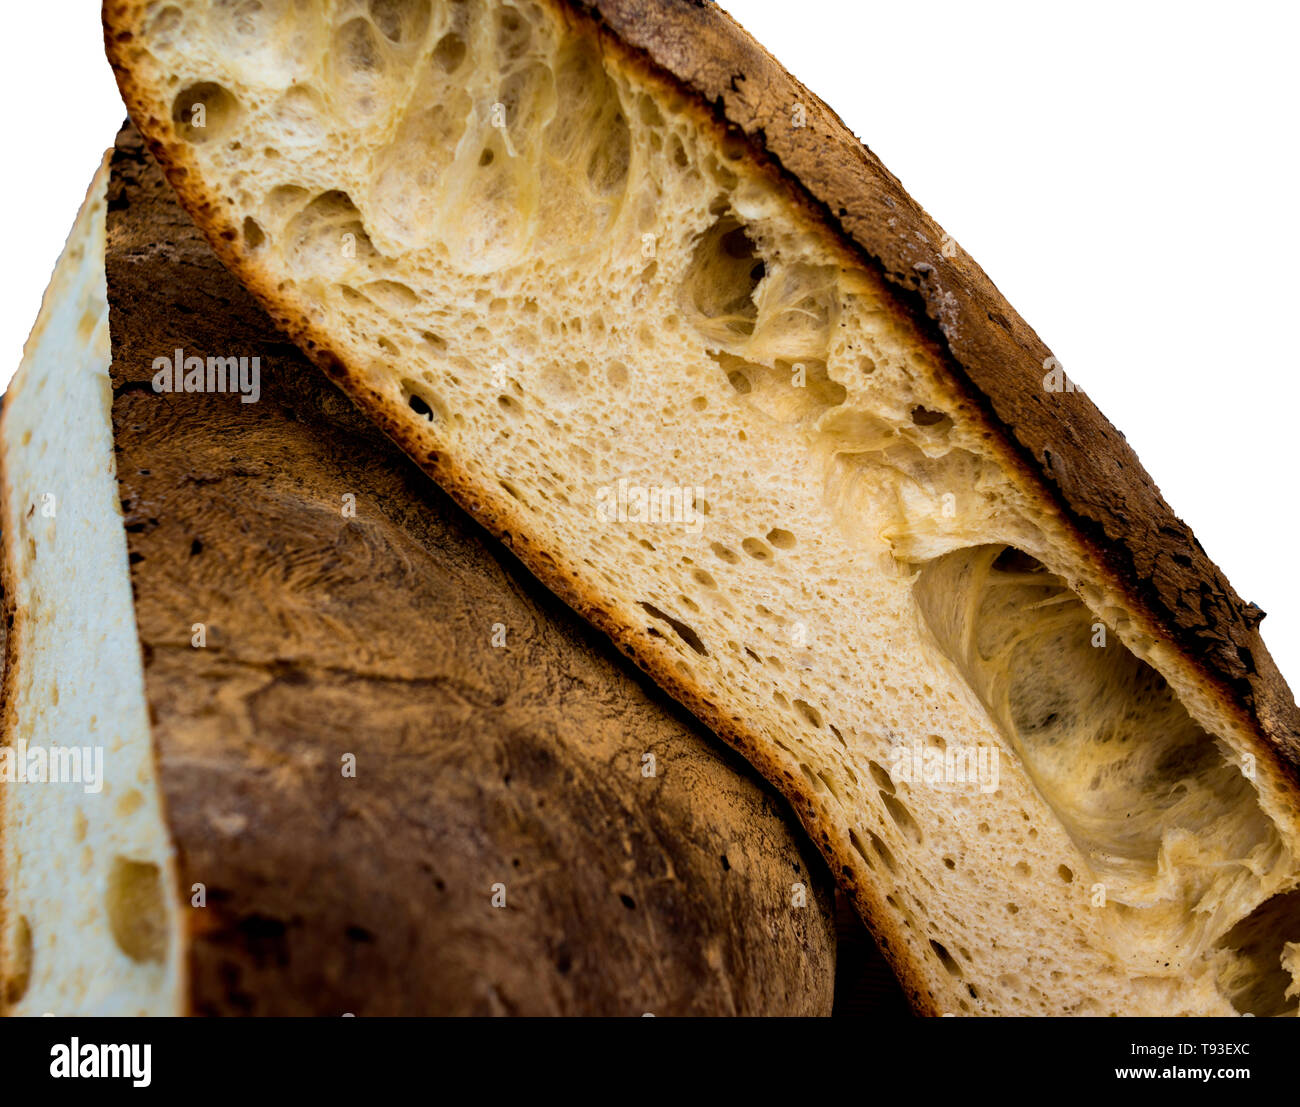 Pan de grano entero fresco de Apulia cortado por la mitad sobre fondo blanco. Foto de stock